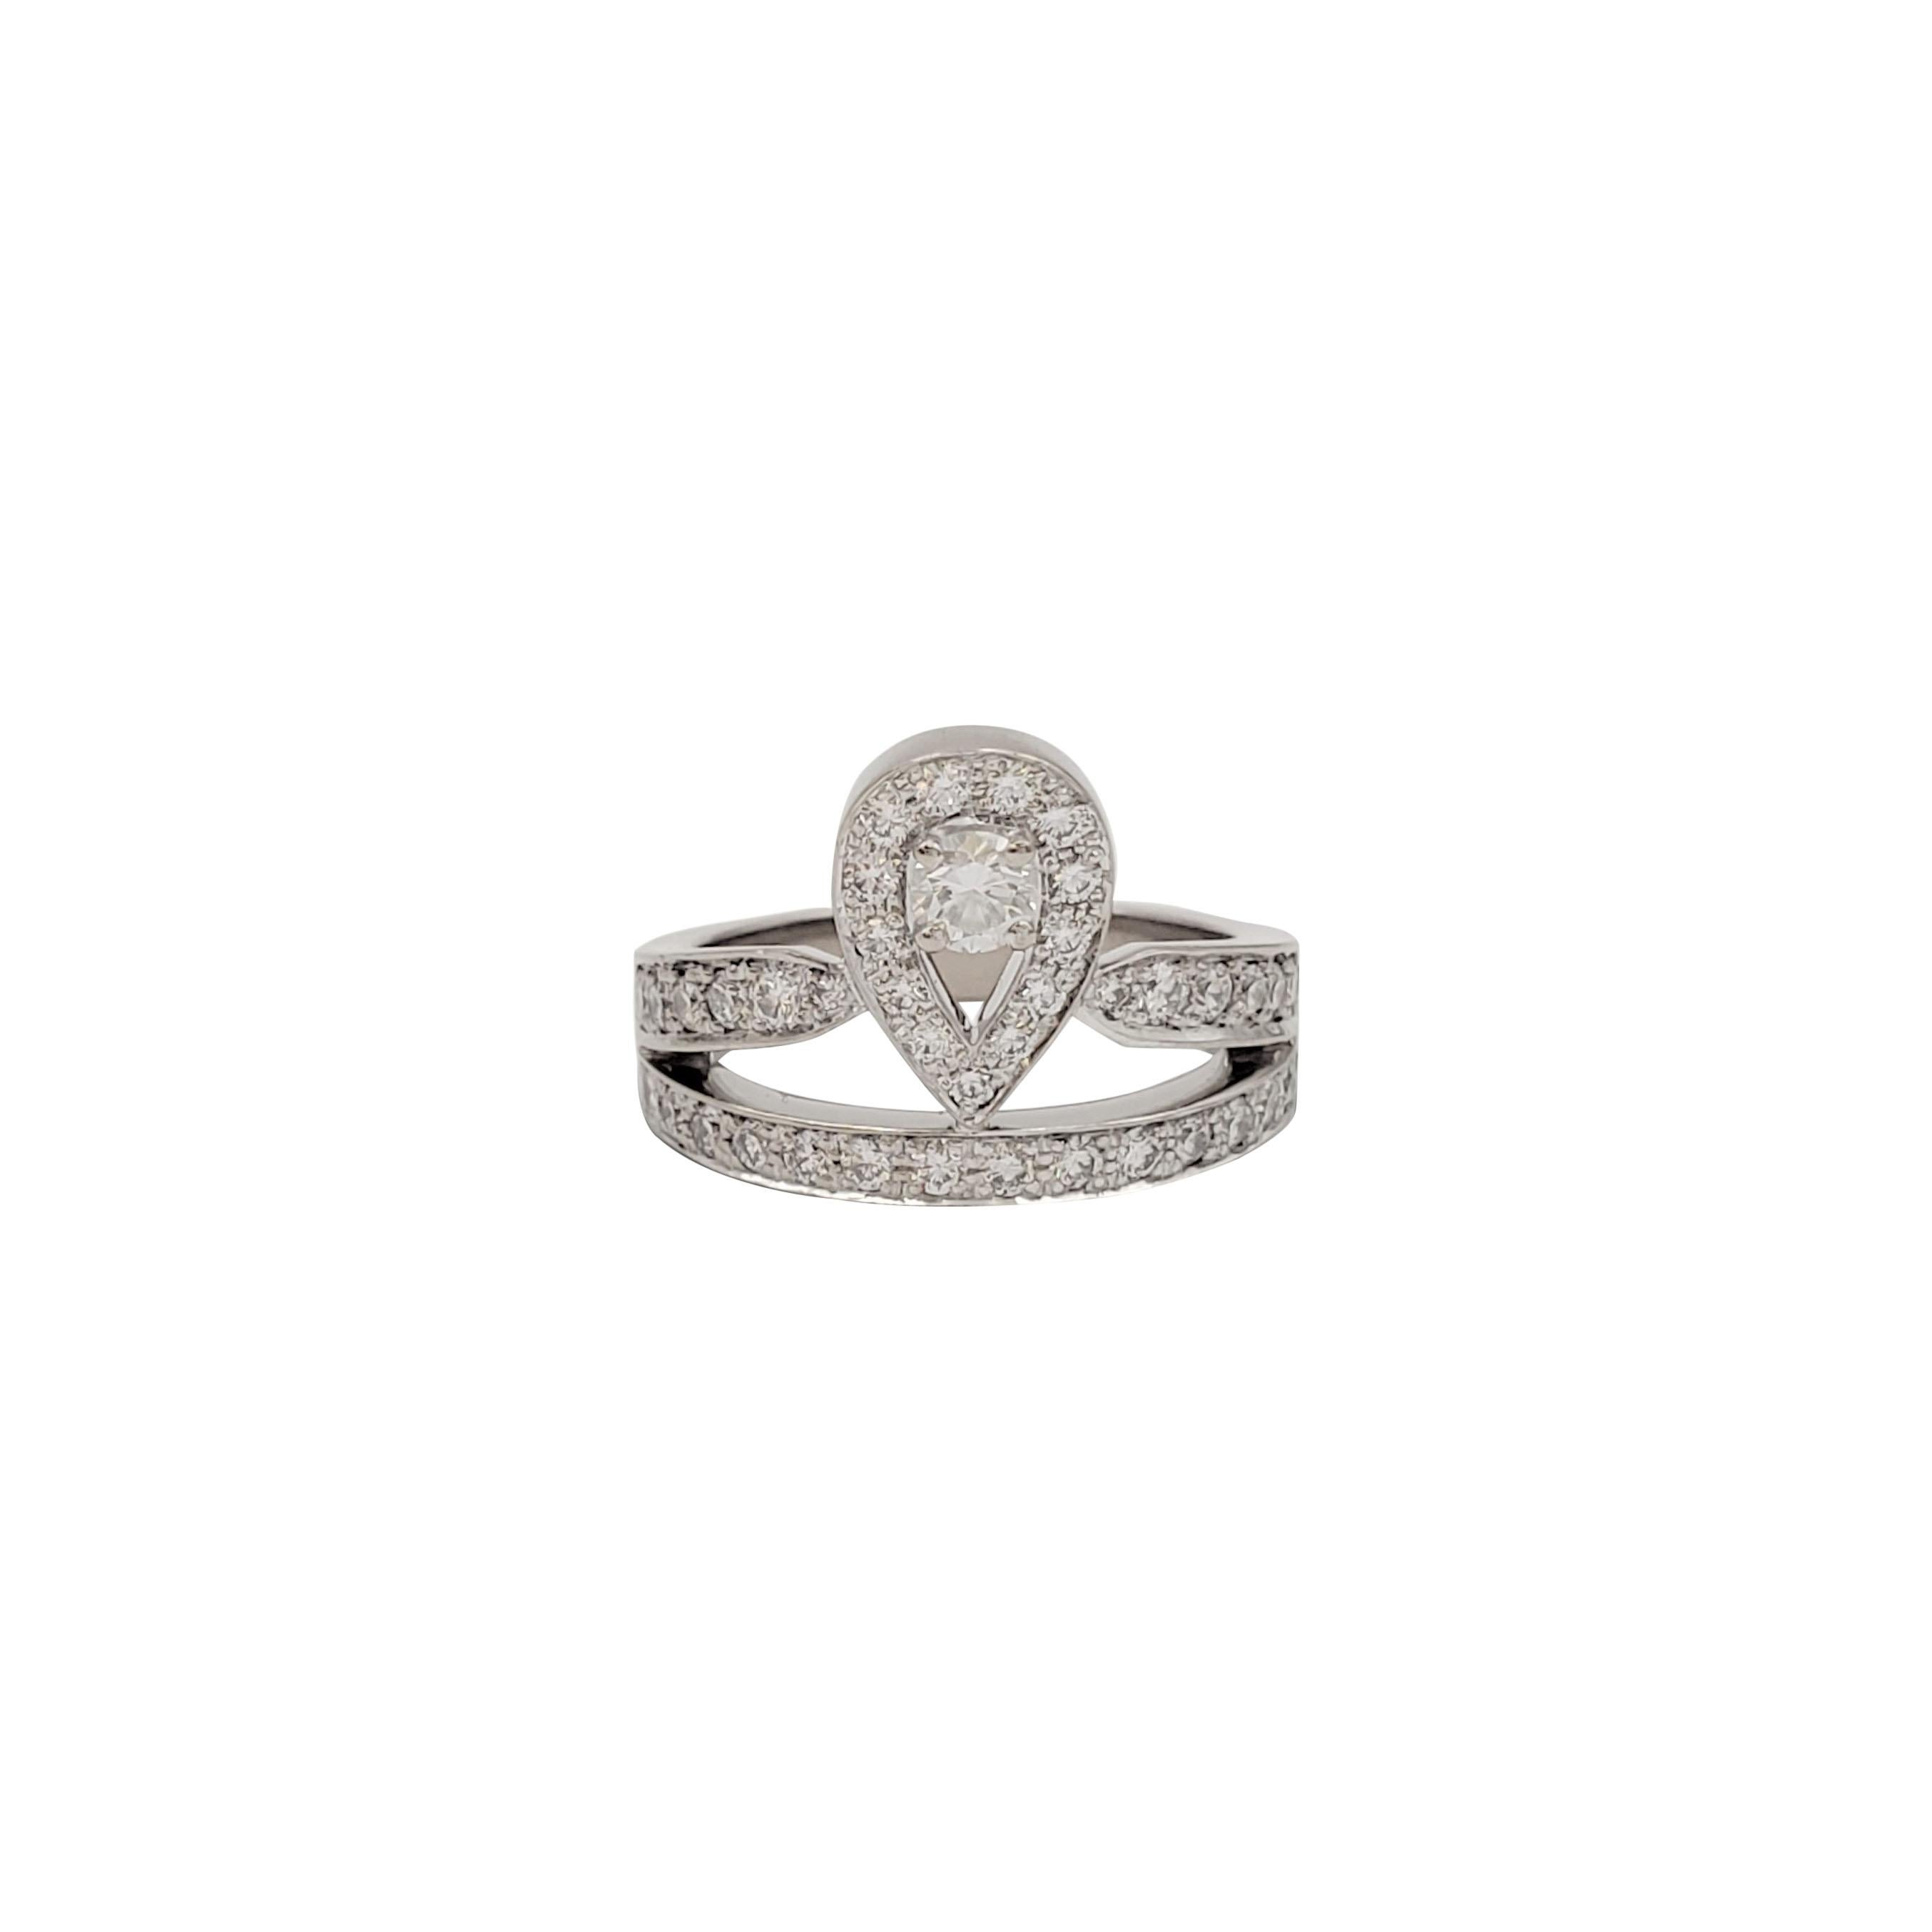 Chaumet 'Josephine' White Gold and Diamond Tiara Ring